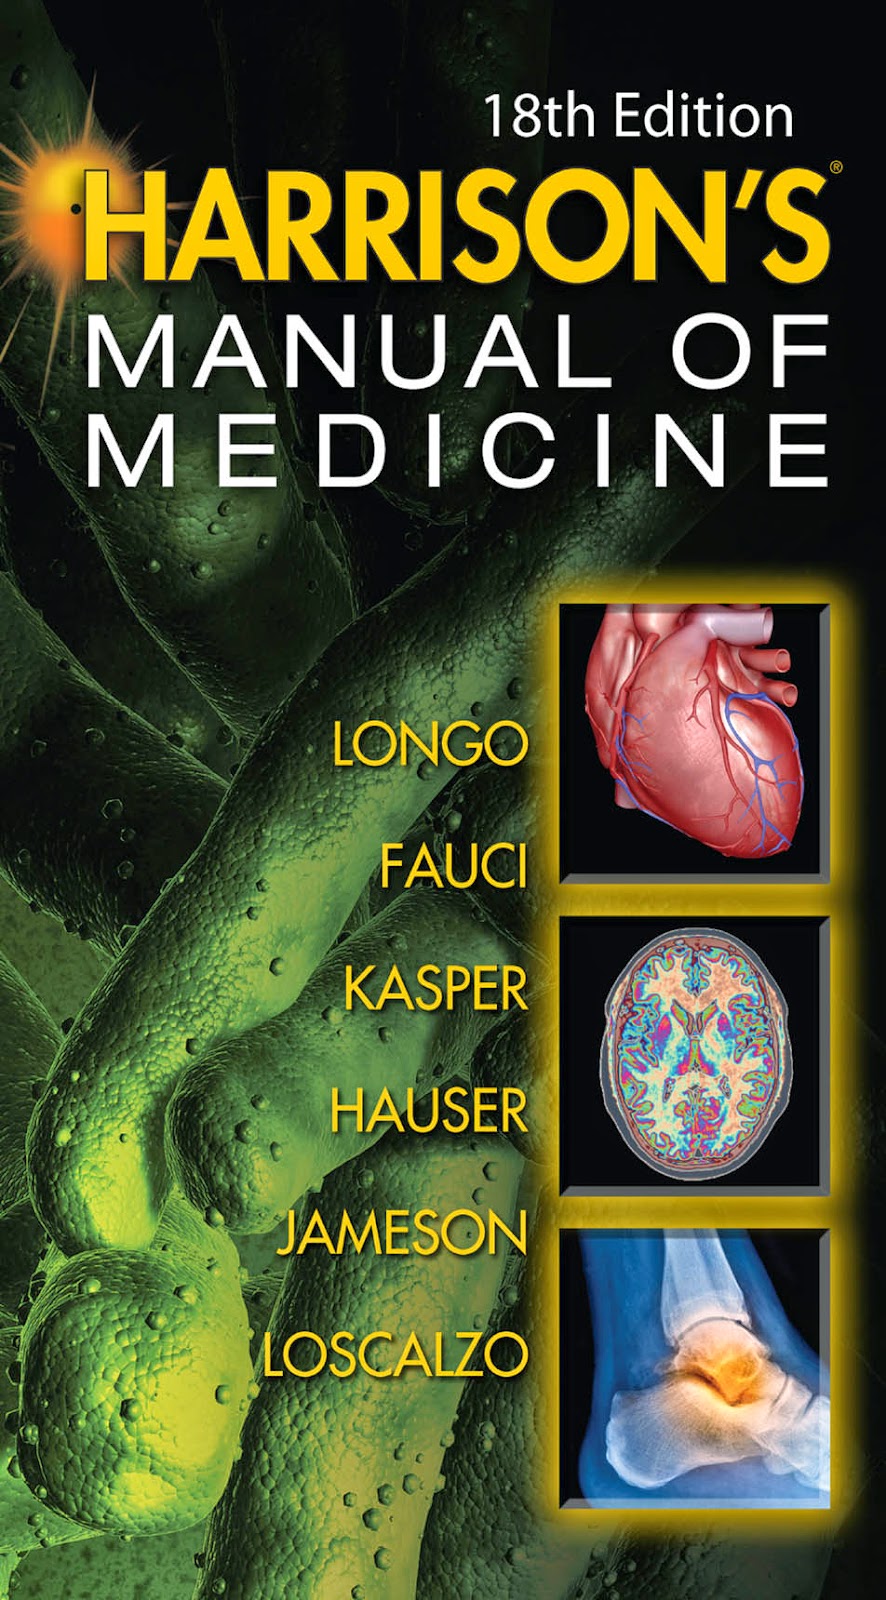 FREE MEDICAL BOOKS: Harrison's Manual of Medicine, 18th Edition.